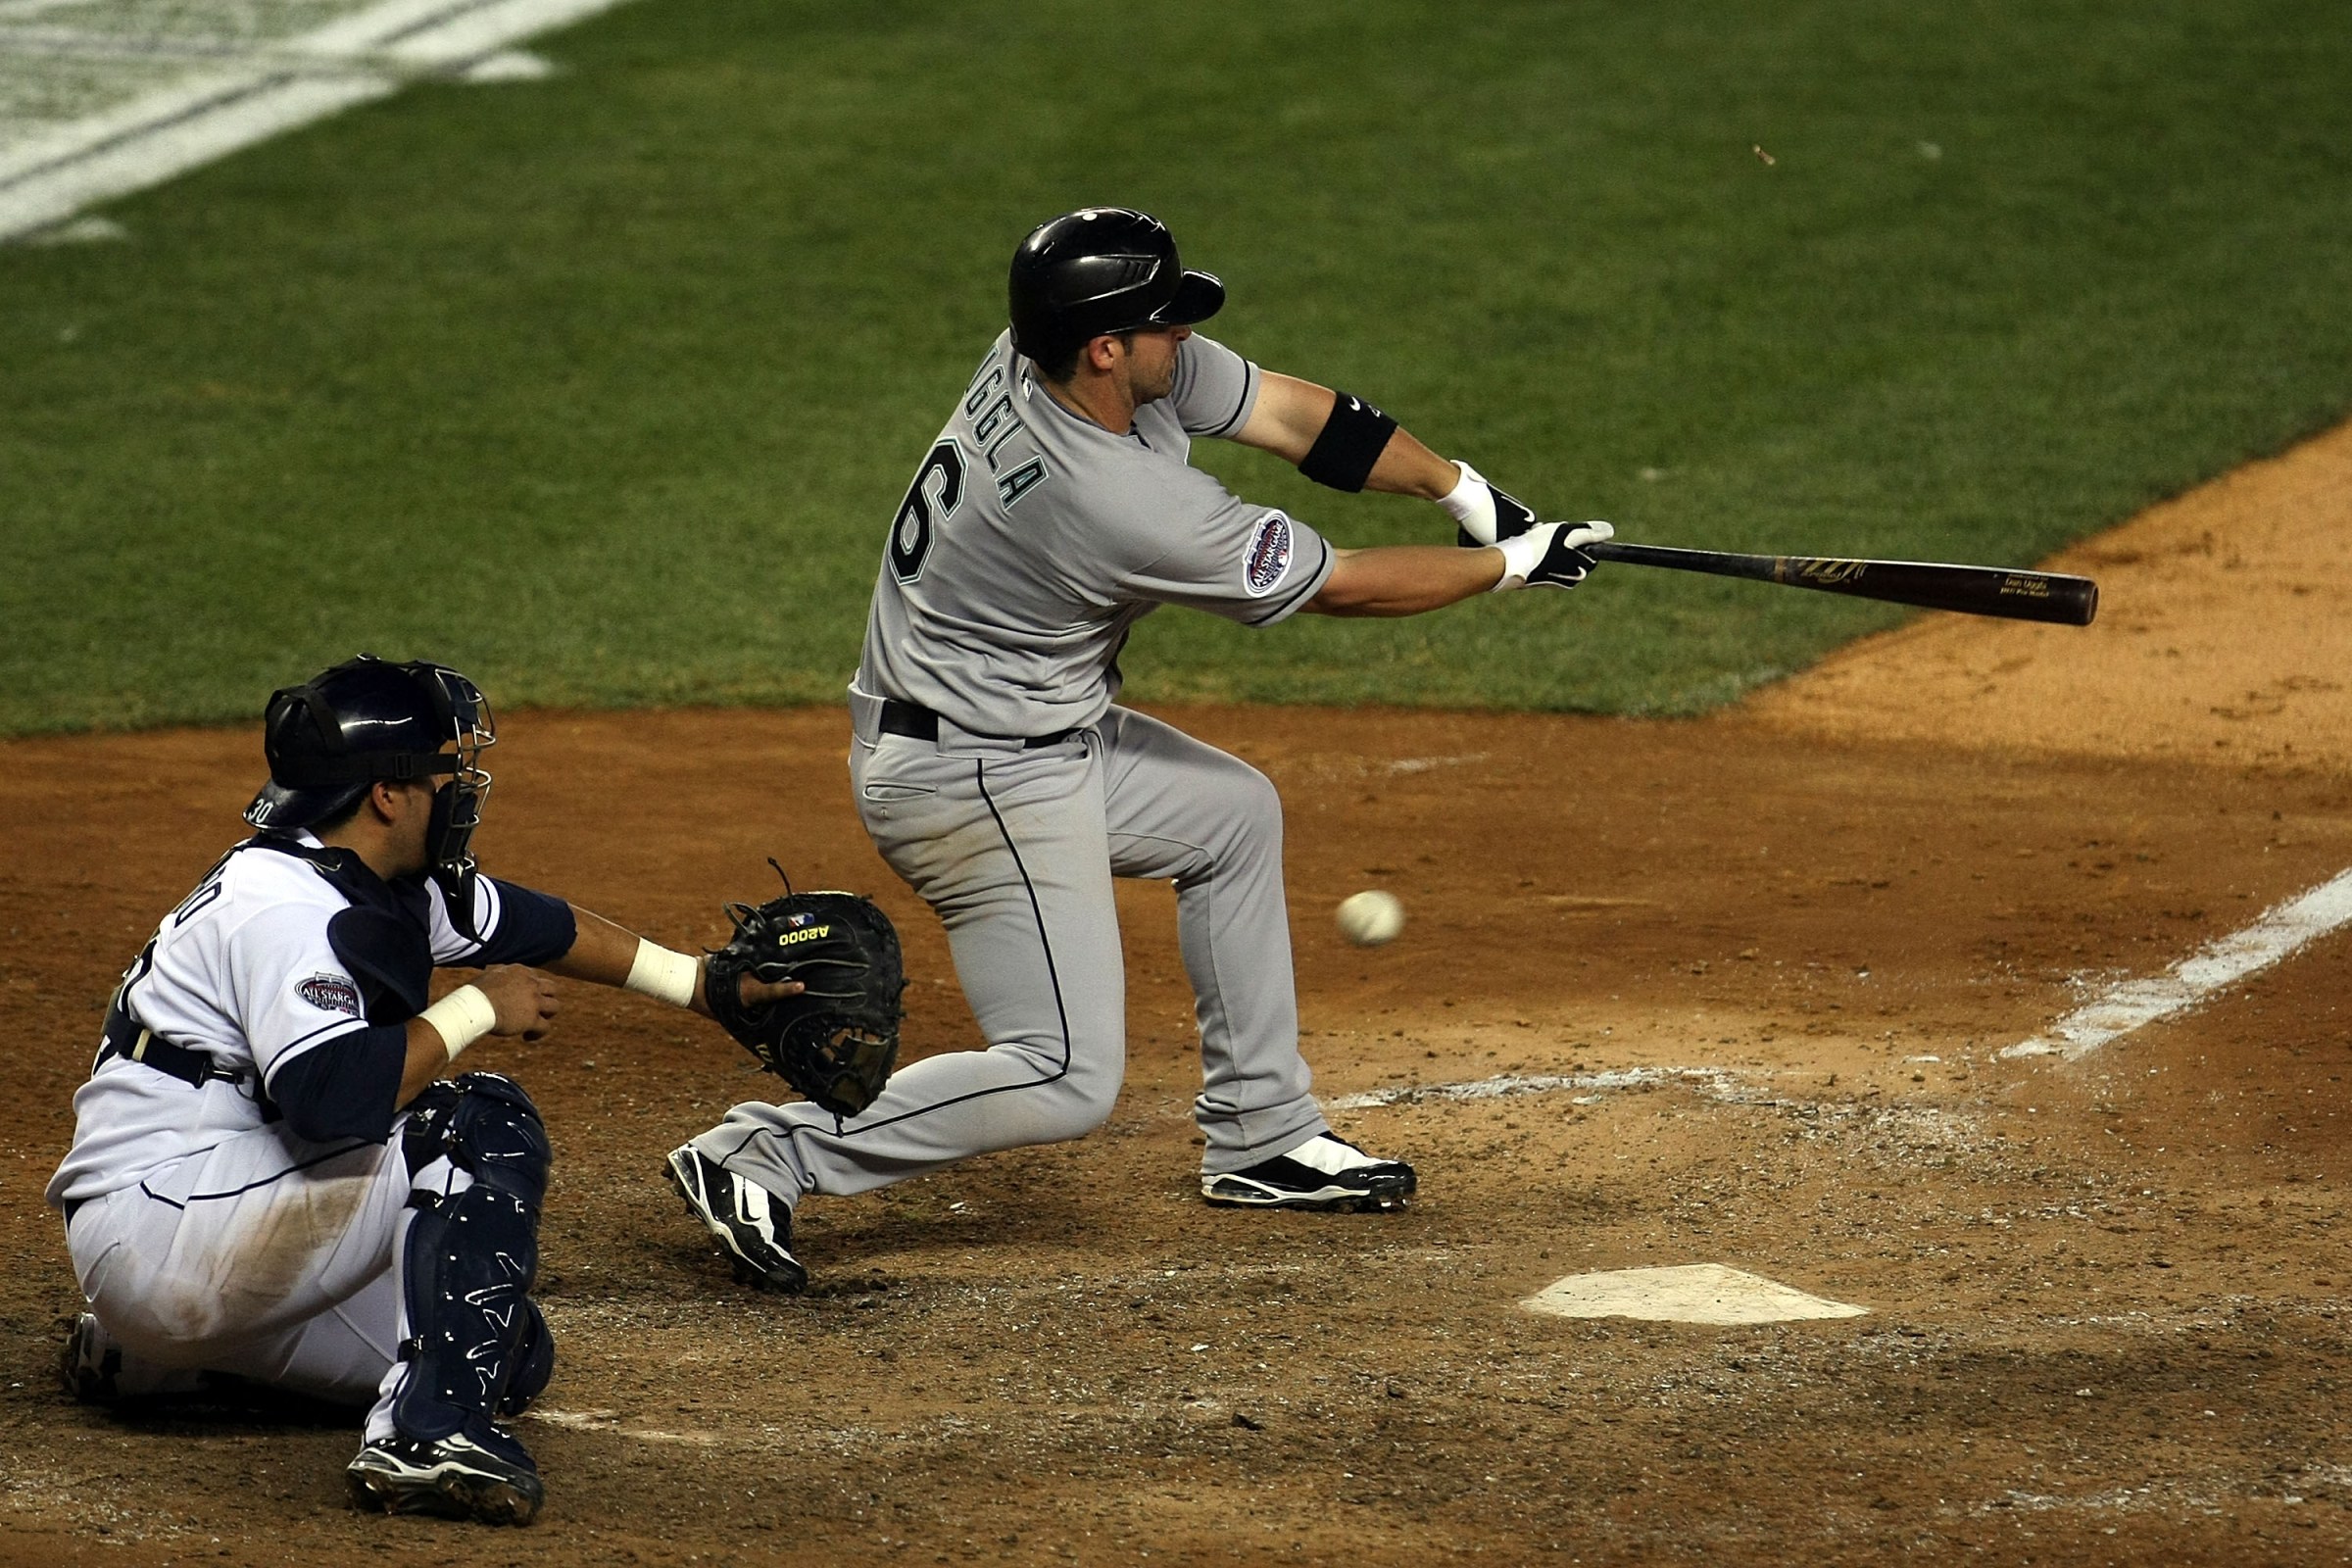 Dan Uggla in the 2008 MLB All-Star Game, striking out.